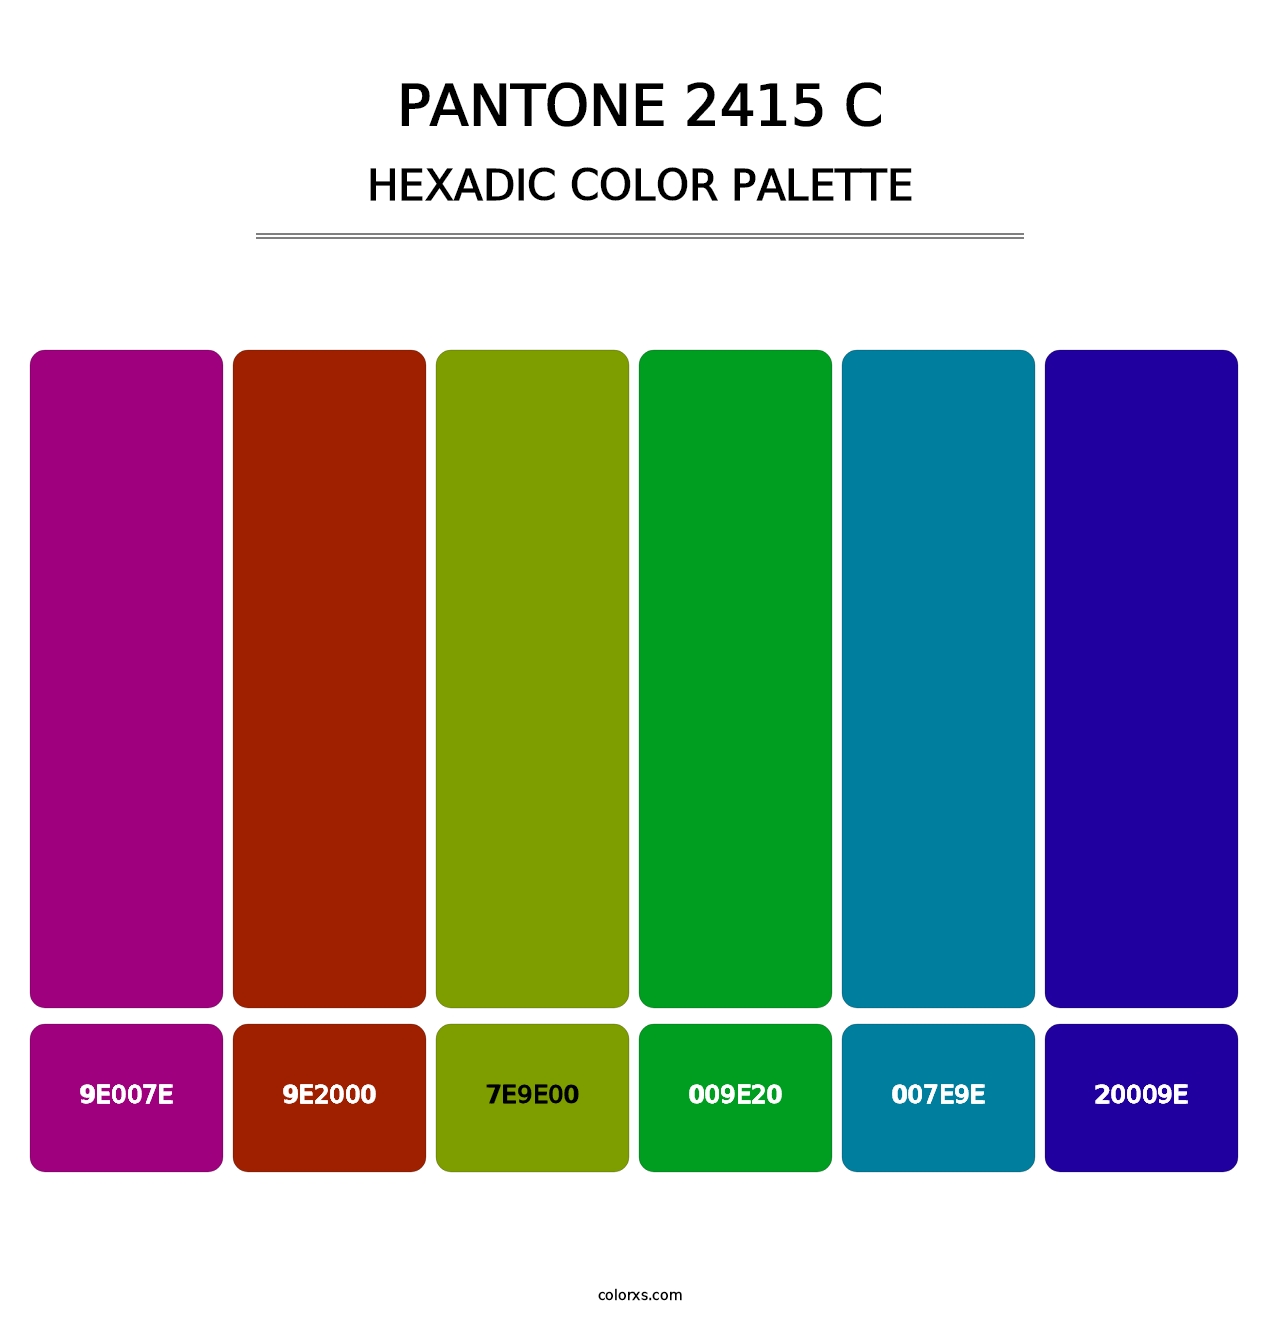 PANTONE 2415 C - Hexadic Color Palette